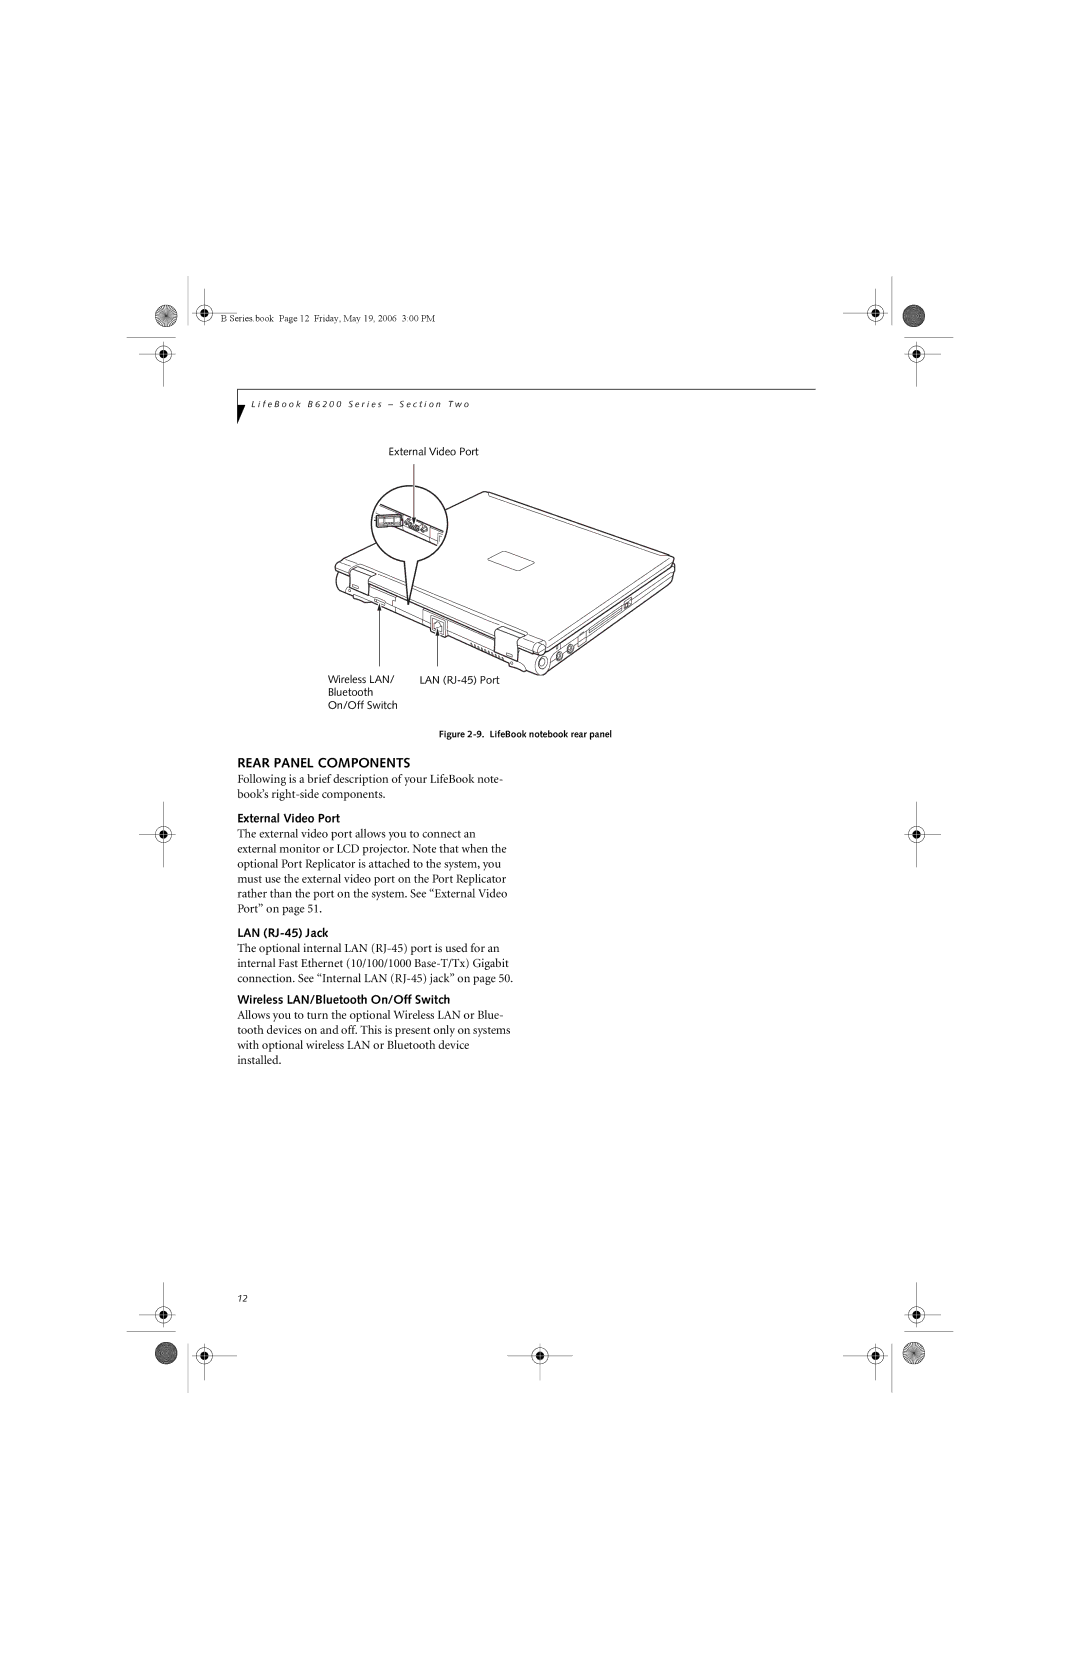 Fujitsu Siemens Computers B6210 manual Rear Panel Components, External Video Port, LAN RJ-45 Jack 